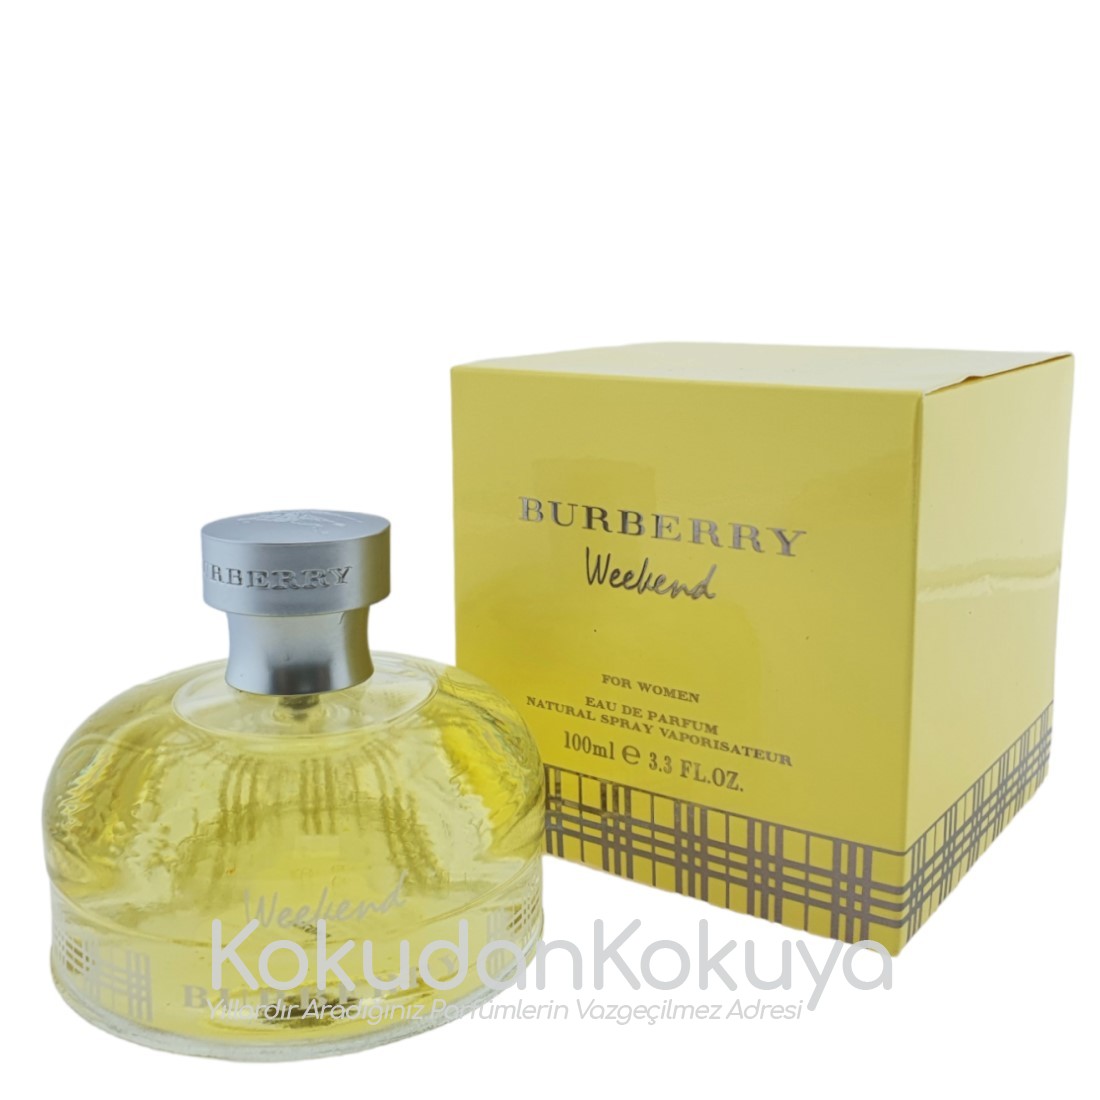 BURBERRY Weekend for Women (Vintage) Parfüm Kadın 100ml Eau De Parfum (EDP) Sprey 